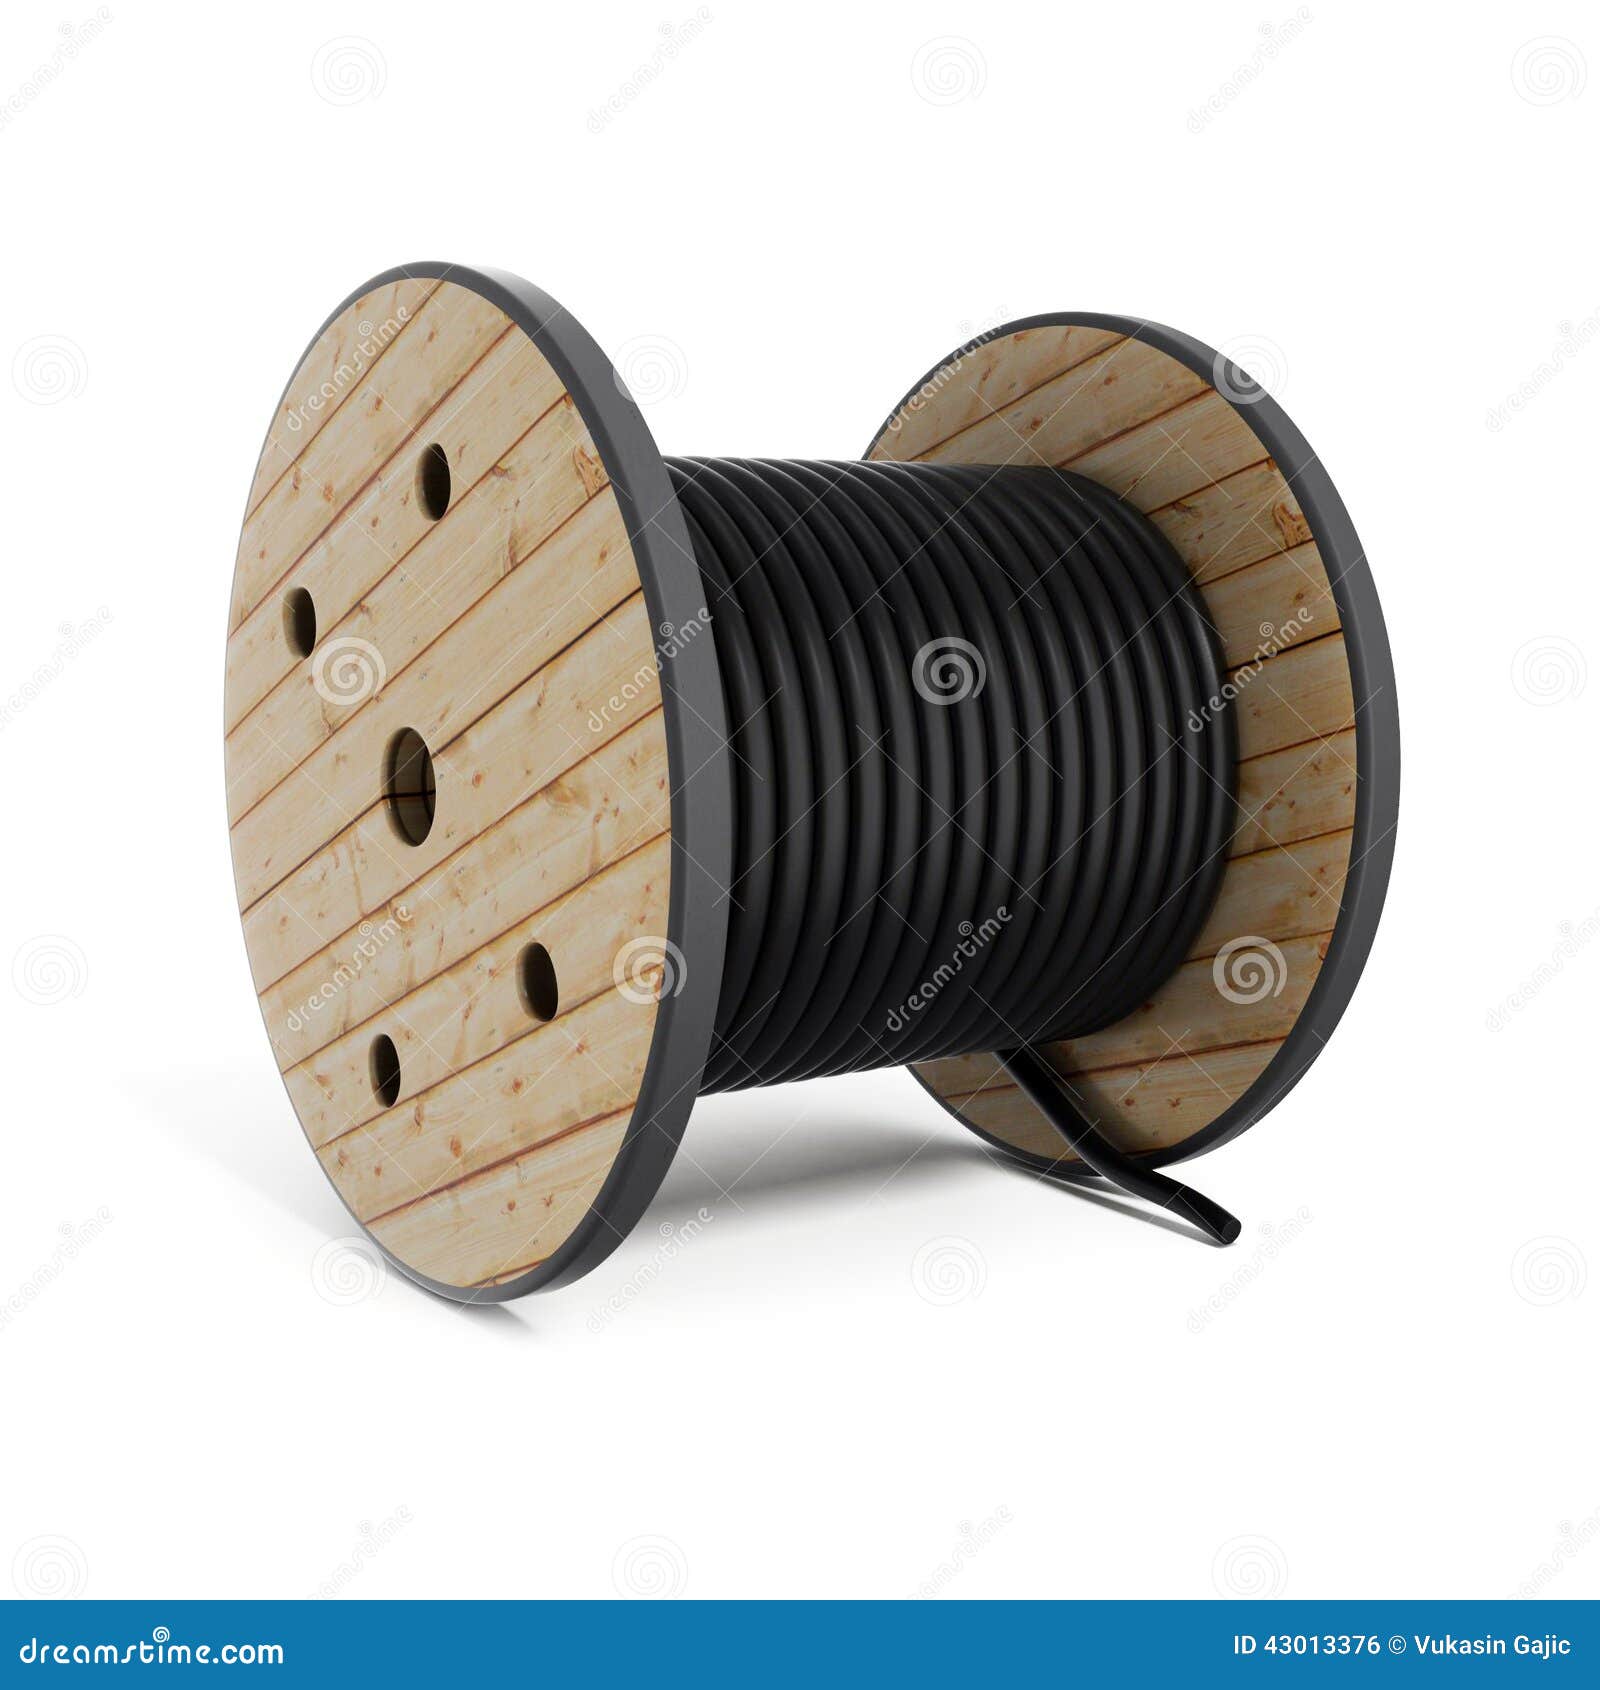 https://thumbs.dreamstime.com/z/cable-drum-industrial-hose-reel-wooden-high-voltage-43013376.jpg